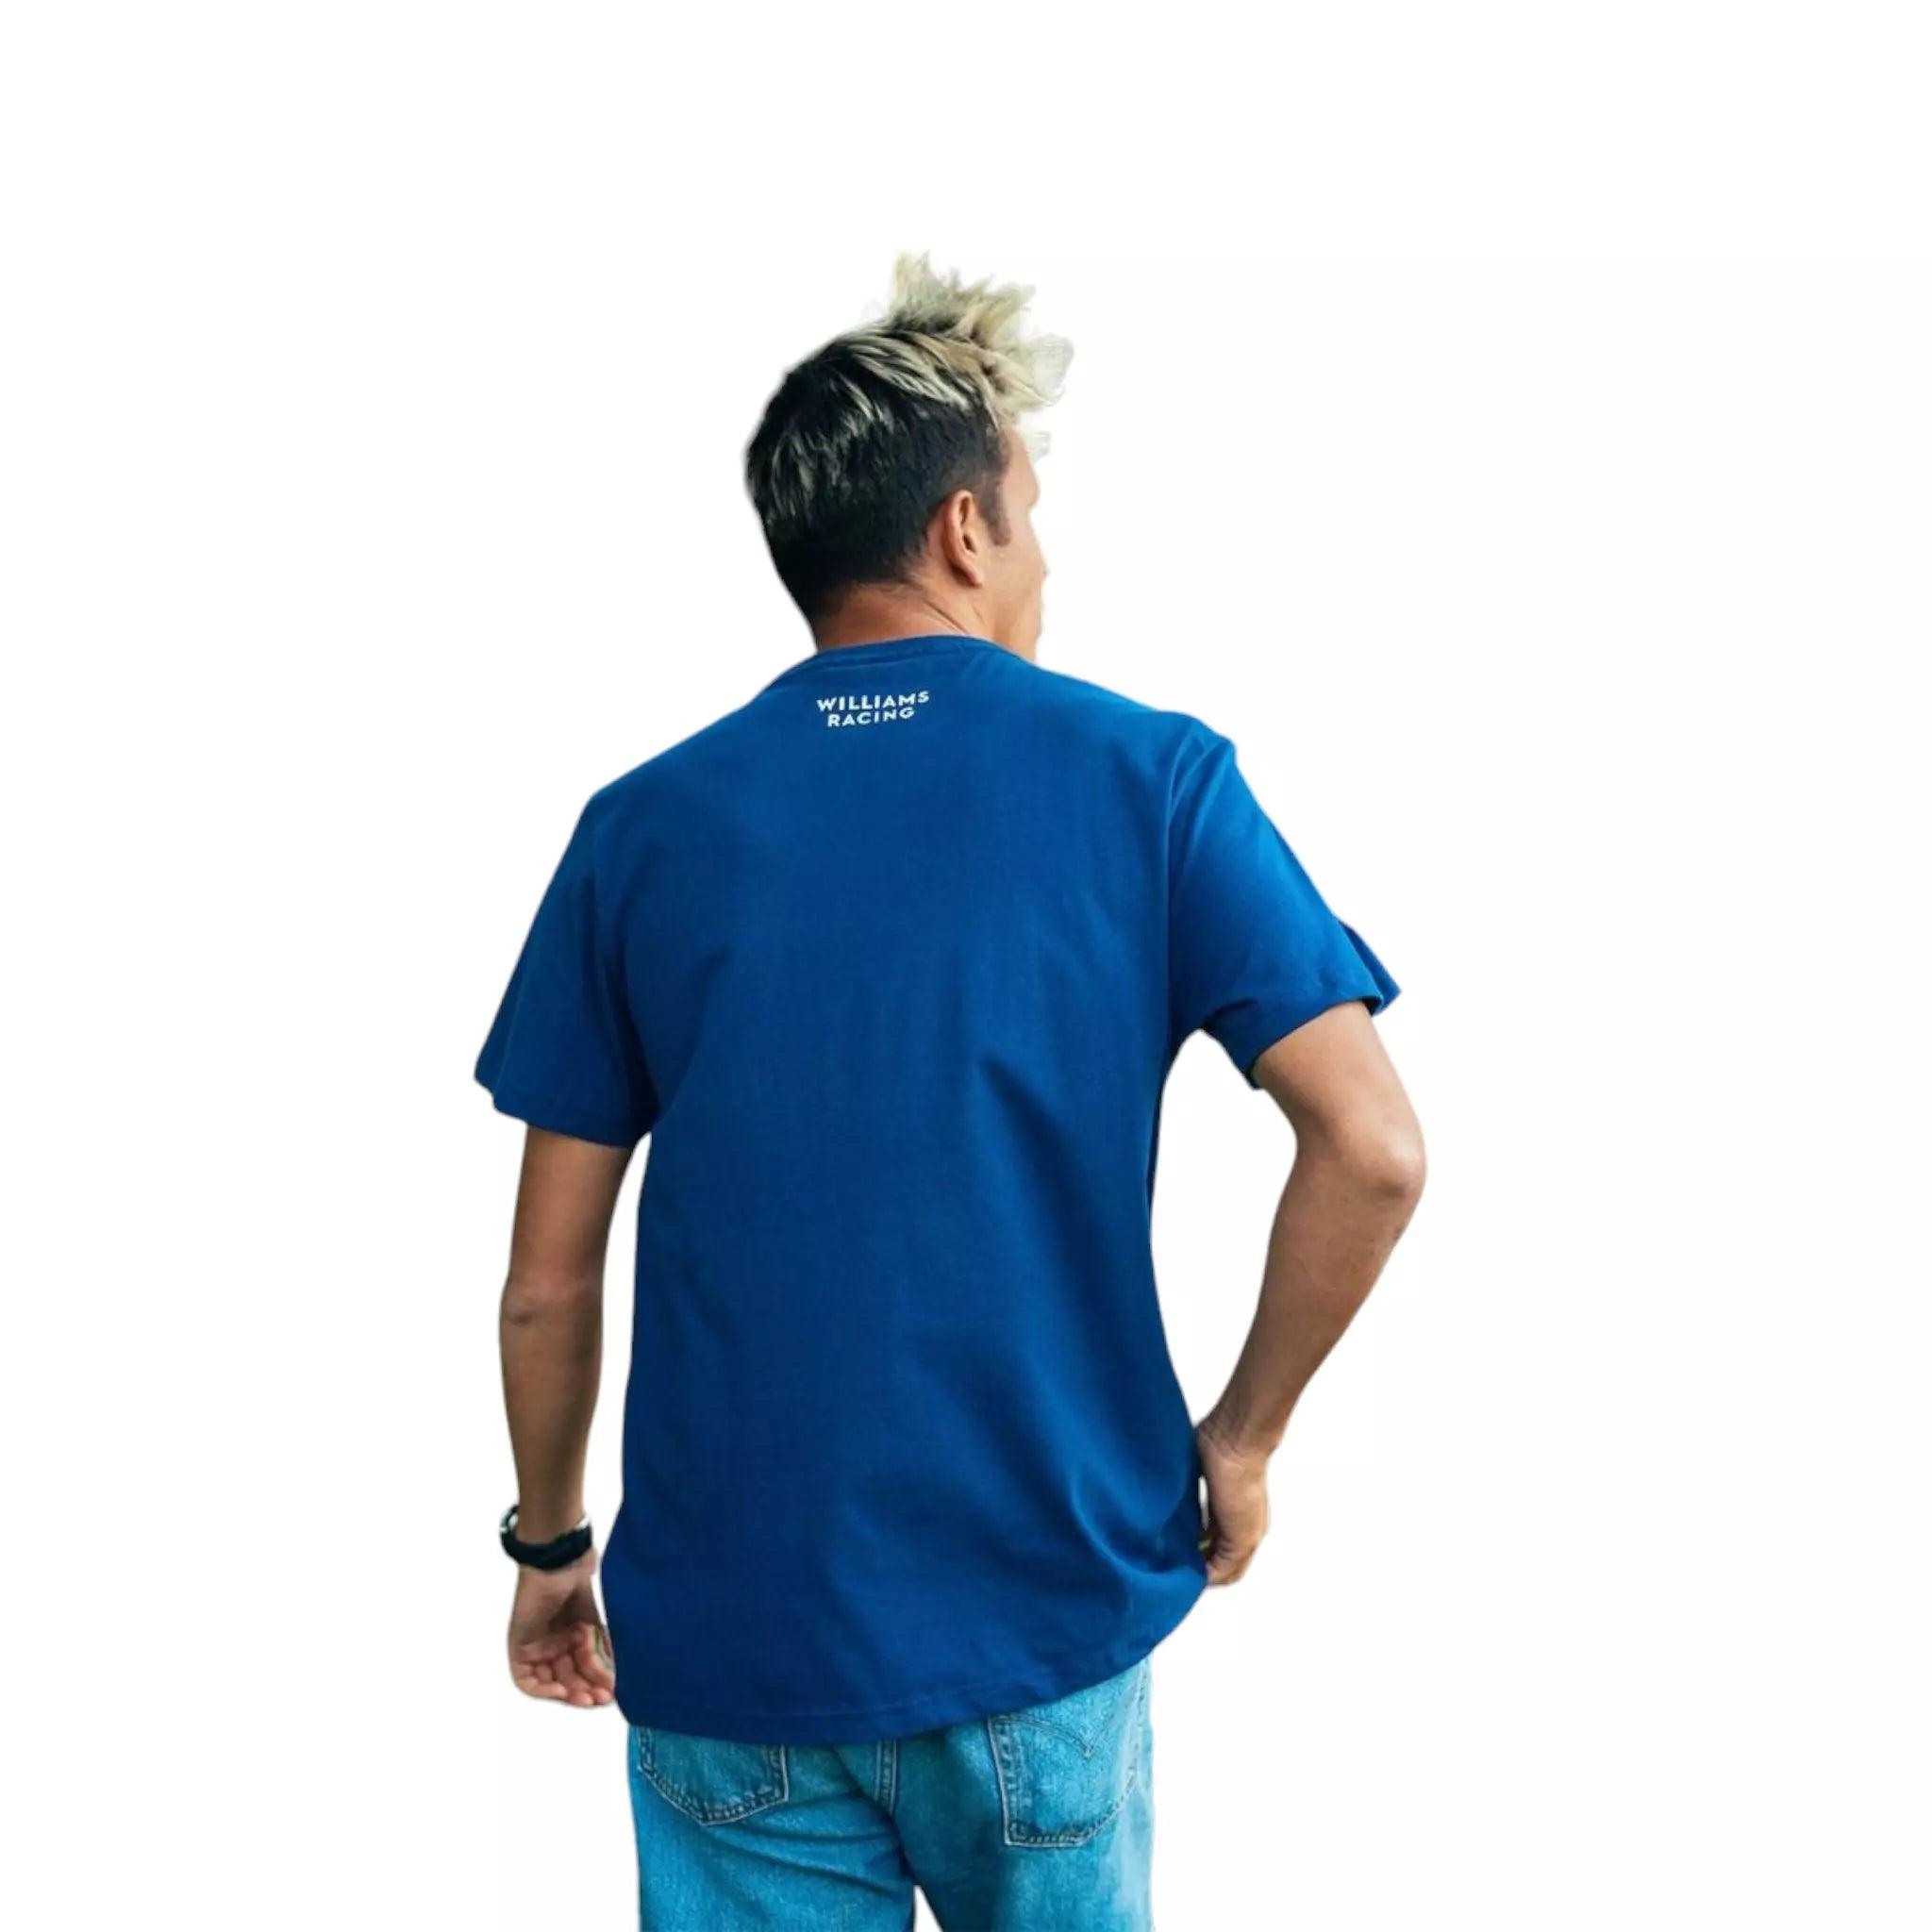 2023 Adult Great Britain Race T-Shirt Mazarine Blue - Dash Racegear 